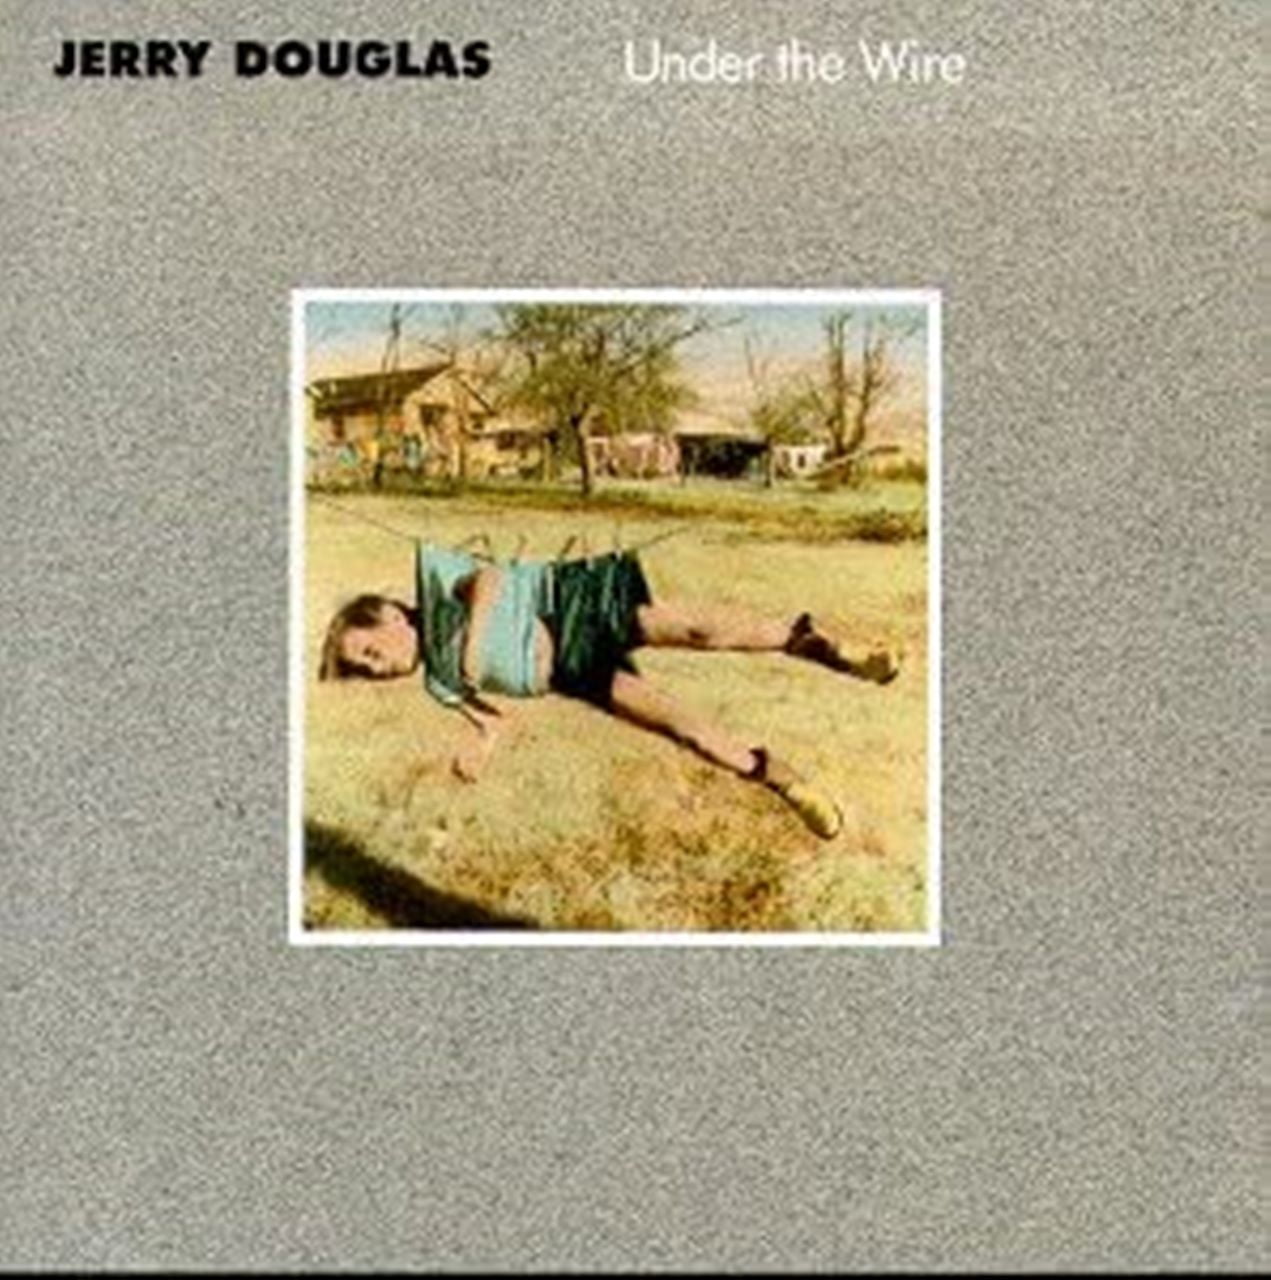 Jerry Douglas – Under The Wire cover album